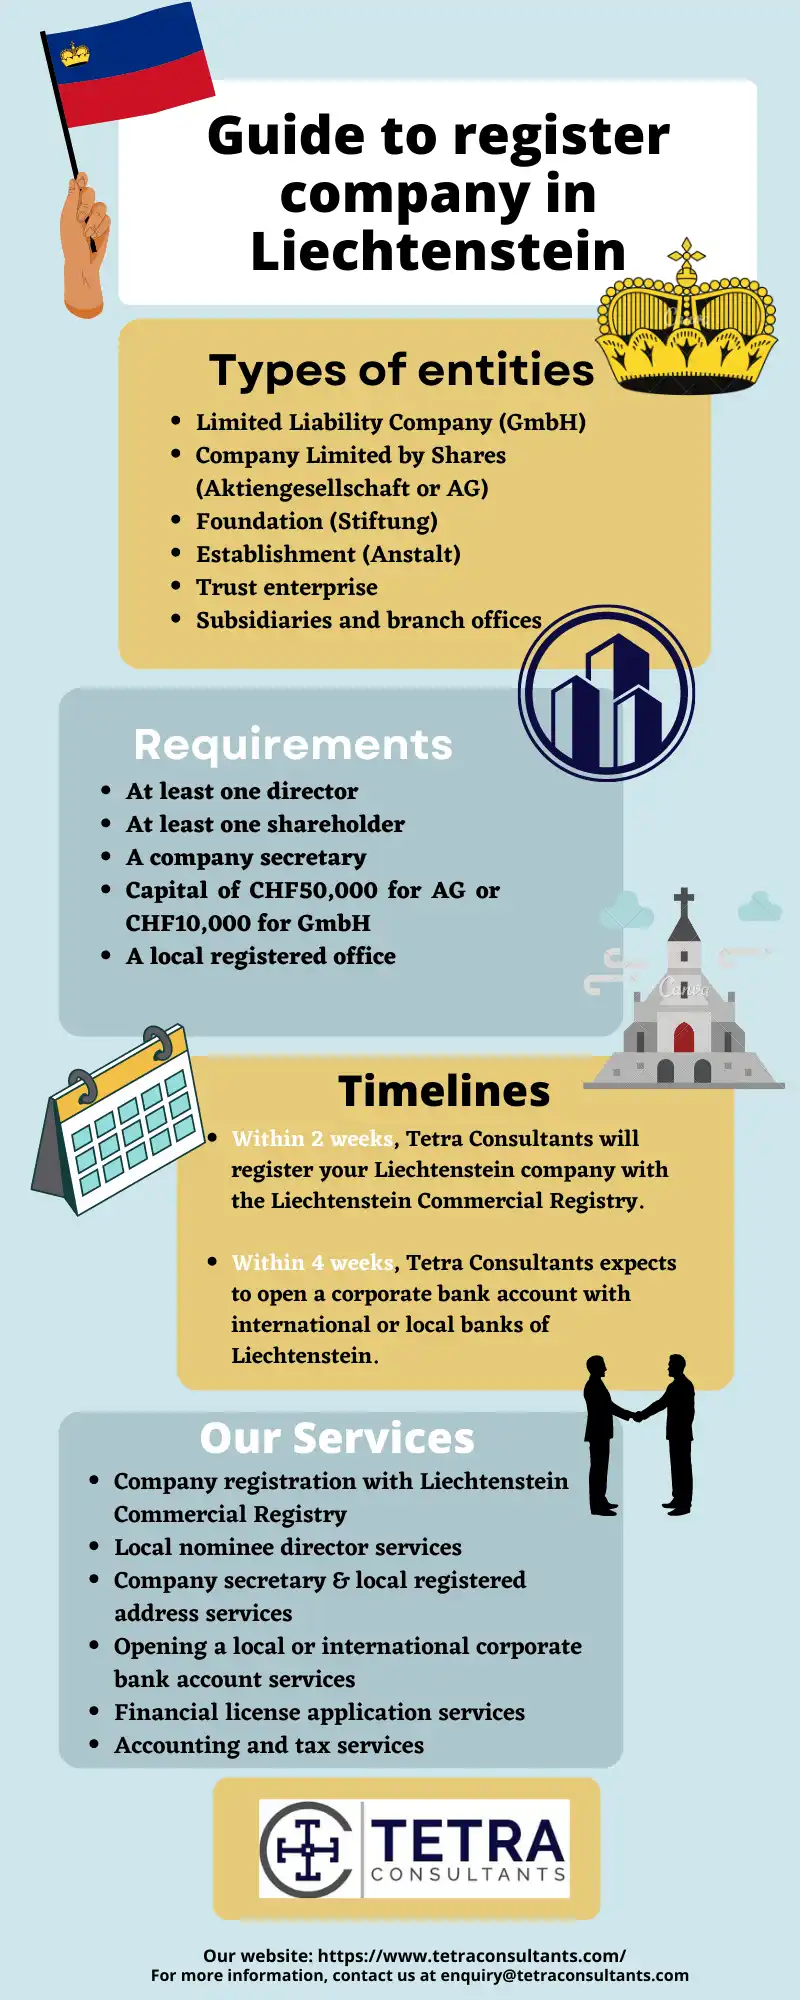 Guide to register a company in Liechtenstein